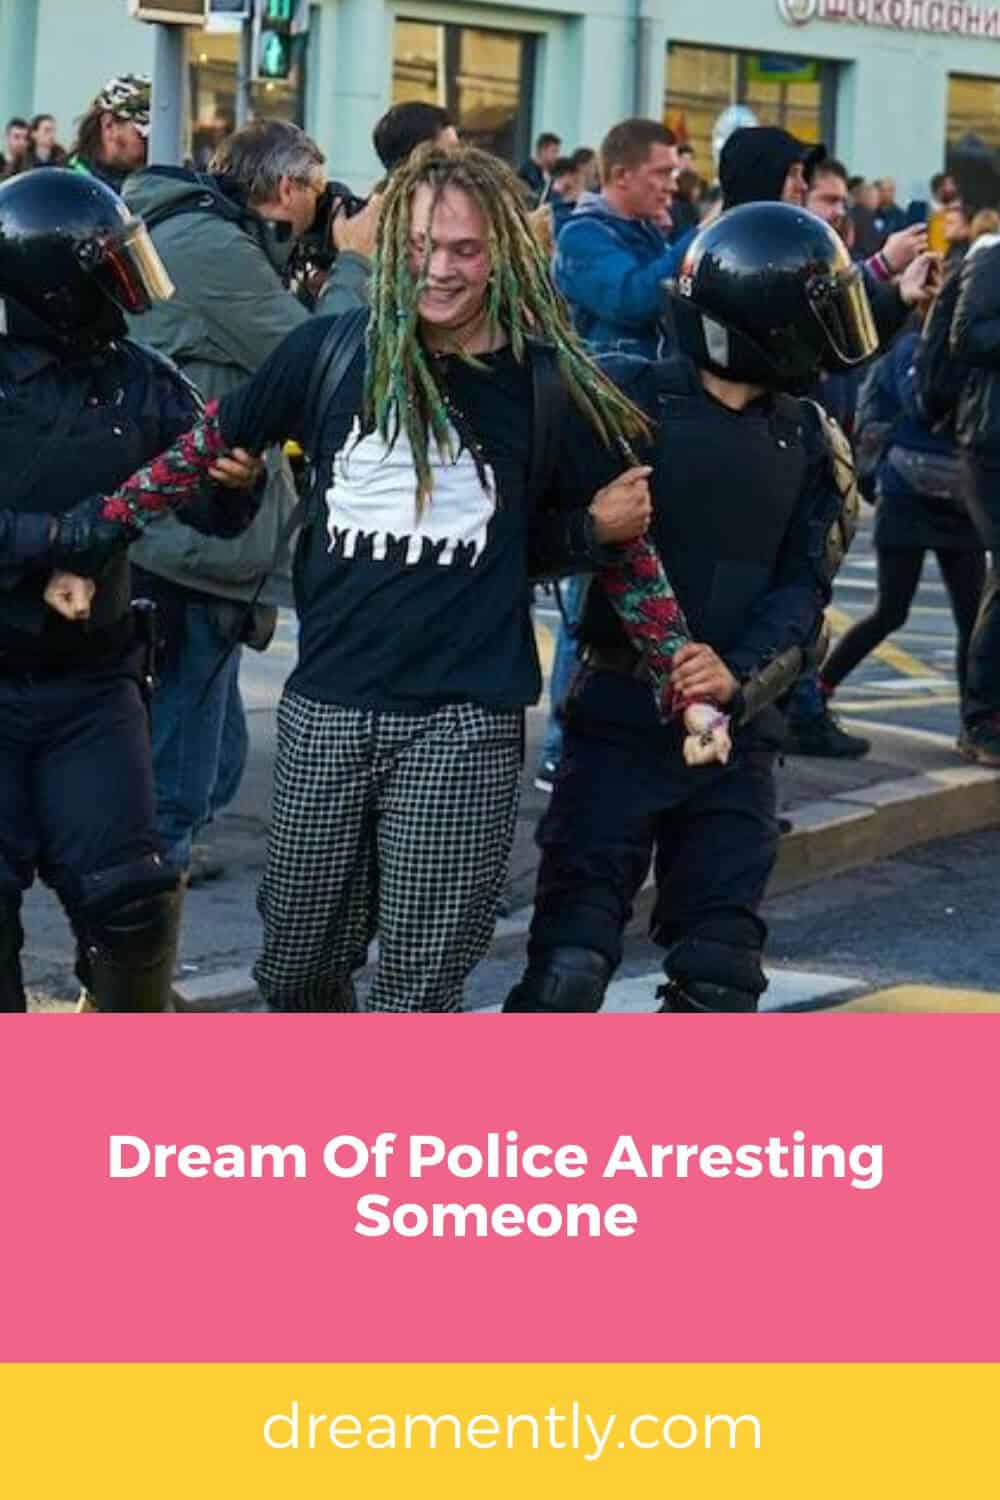 Dream Of Police Arresting Someone (2)